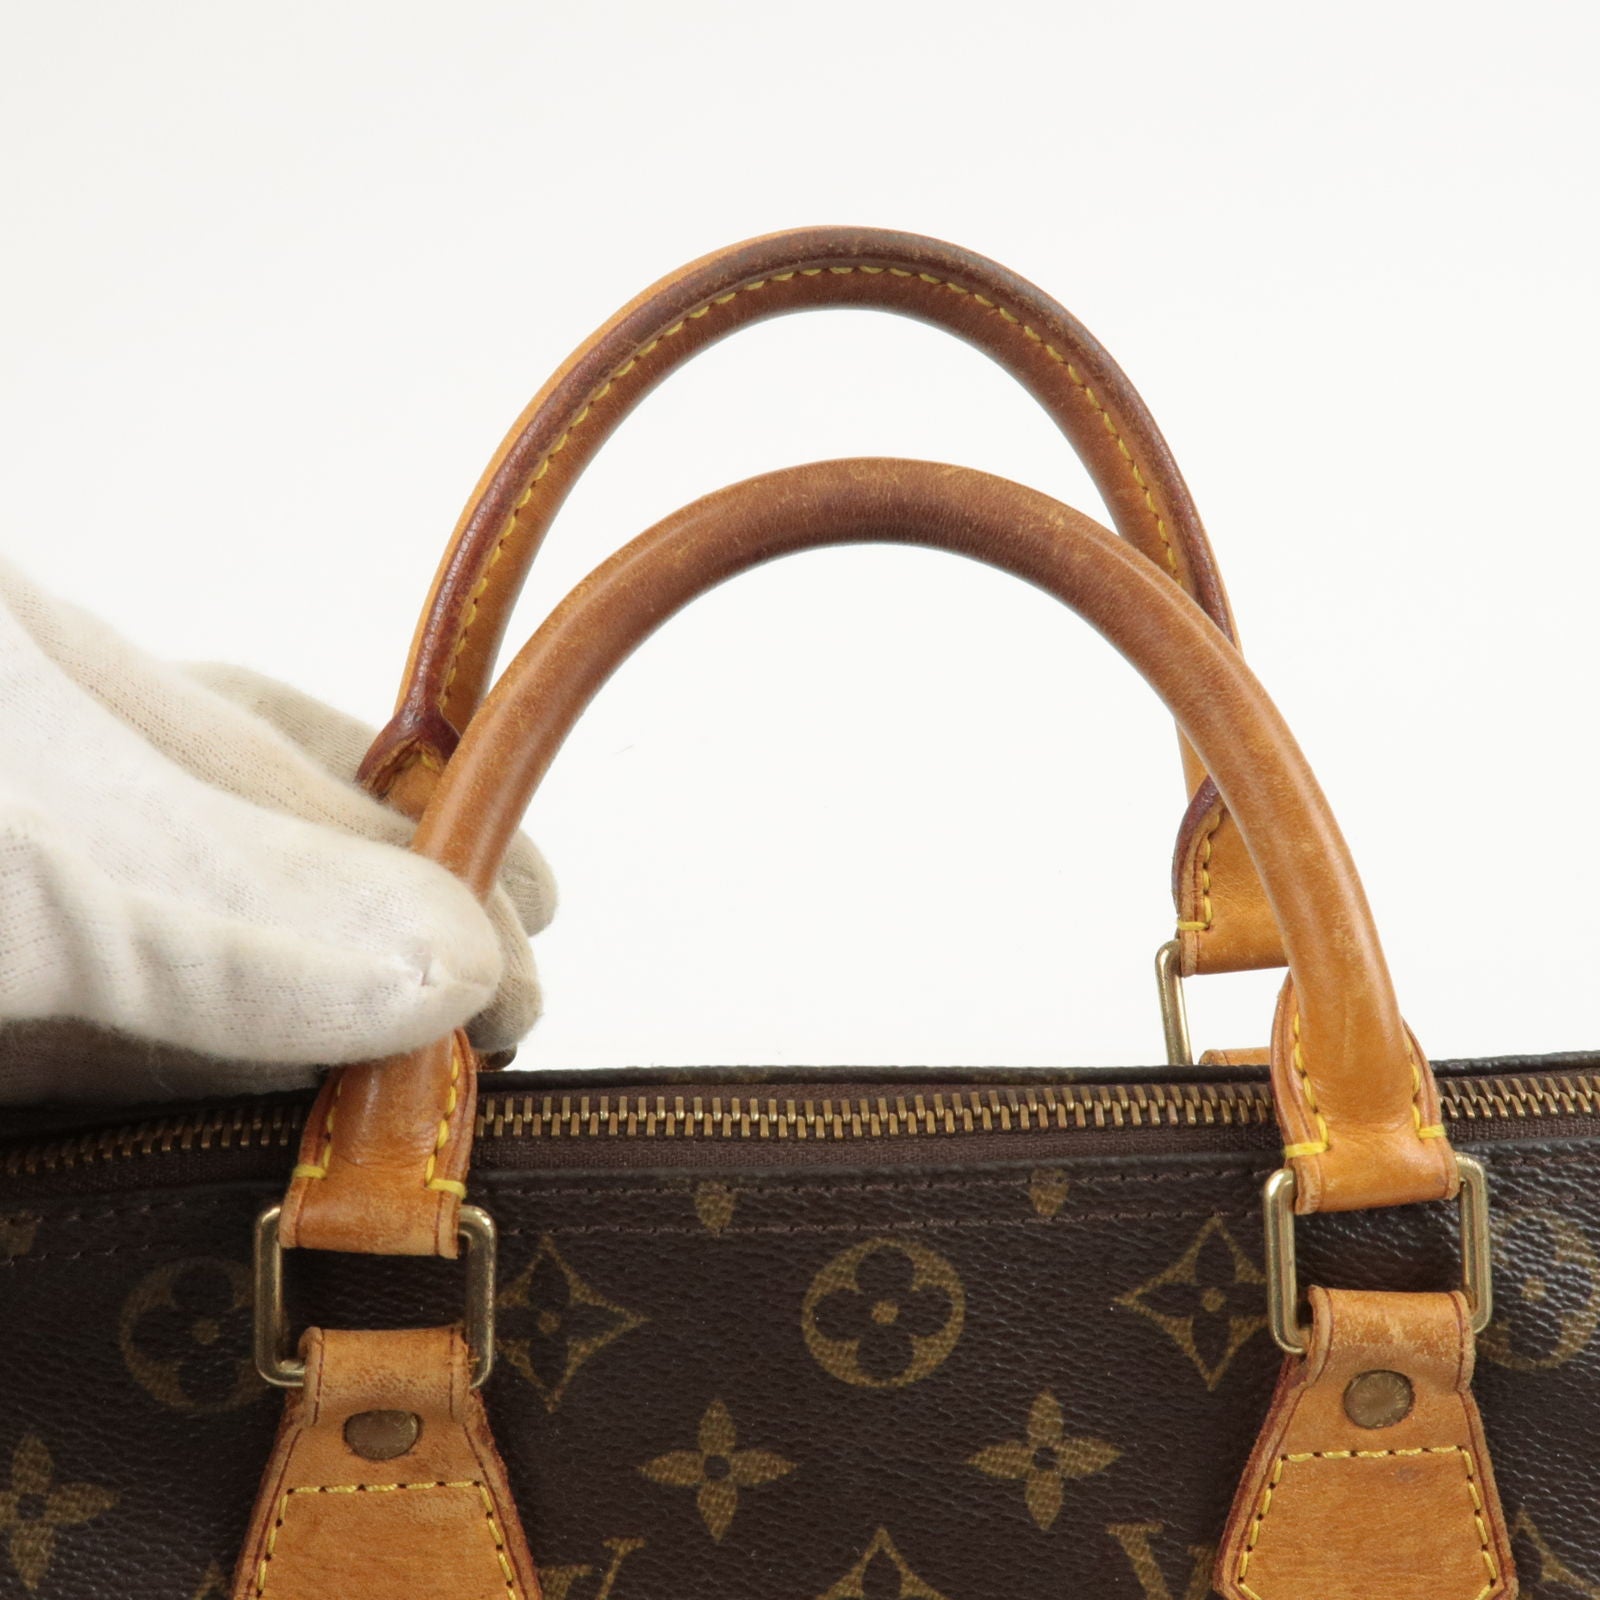 Louis Vuitton Speedy Handbag 30 M41108 IN CANVAS MONOGRAM HAND BAG